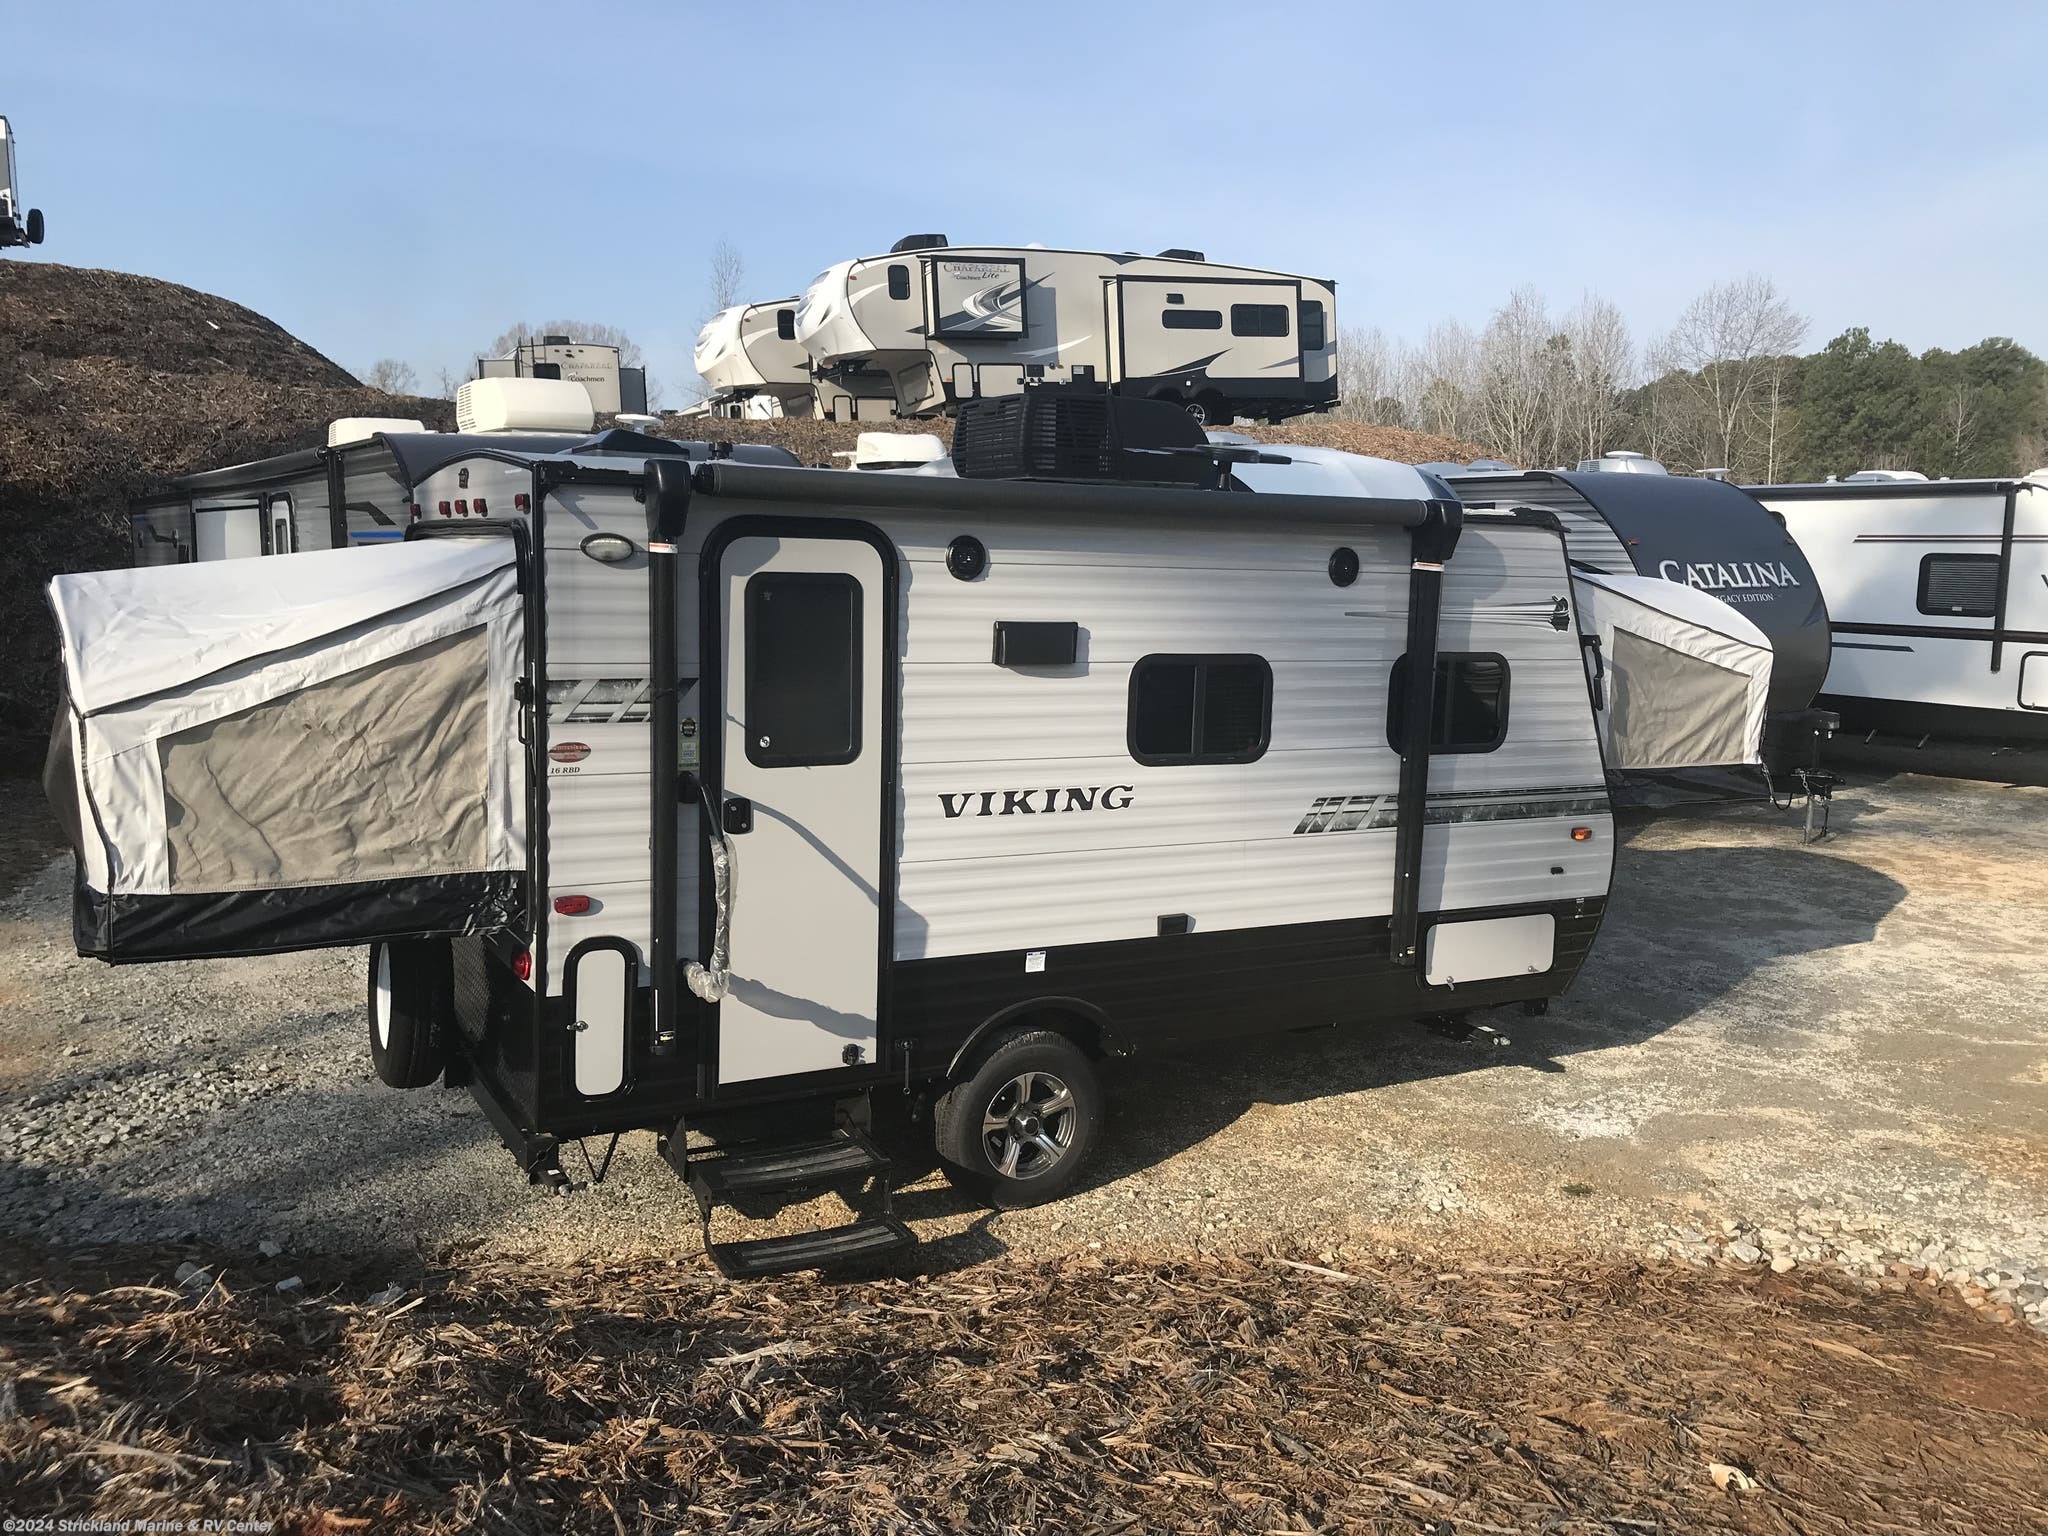 2019 Coachmen Viking 16RBD RV for Sale in Seneca, SC 29678 ...